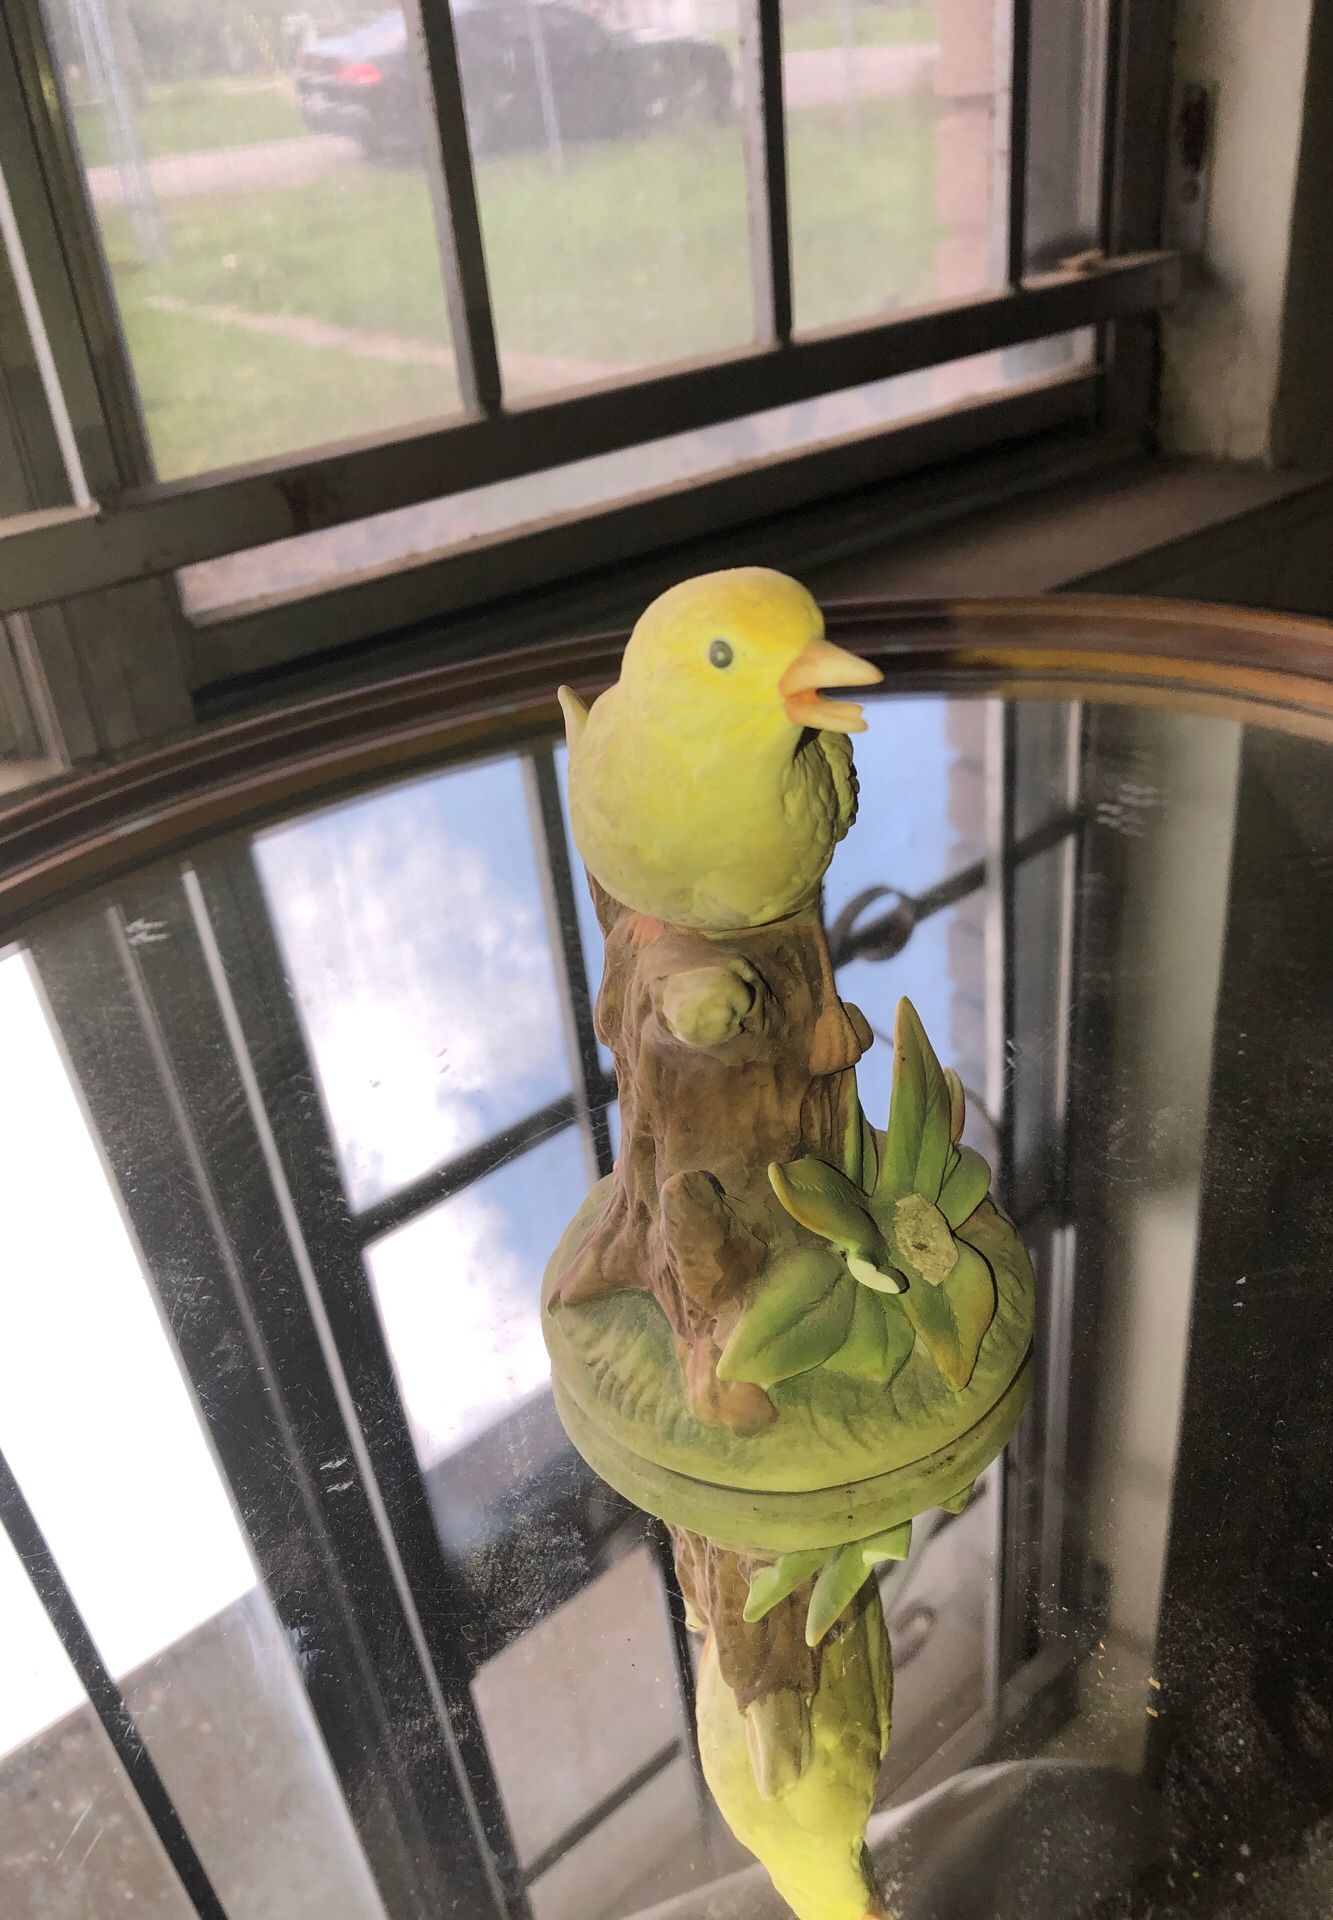 Collectible antique yellow bird statue